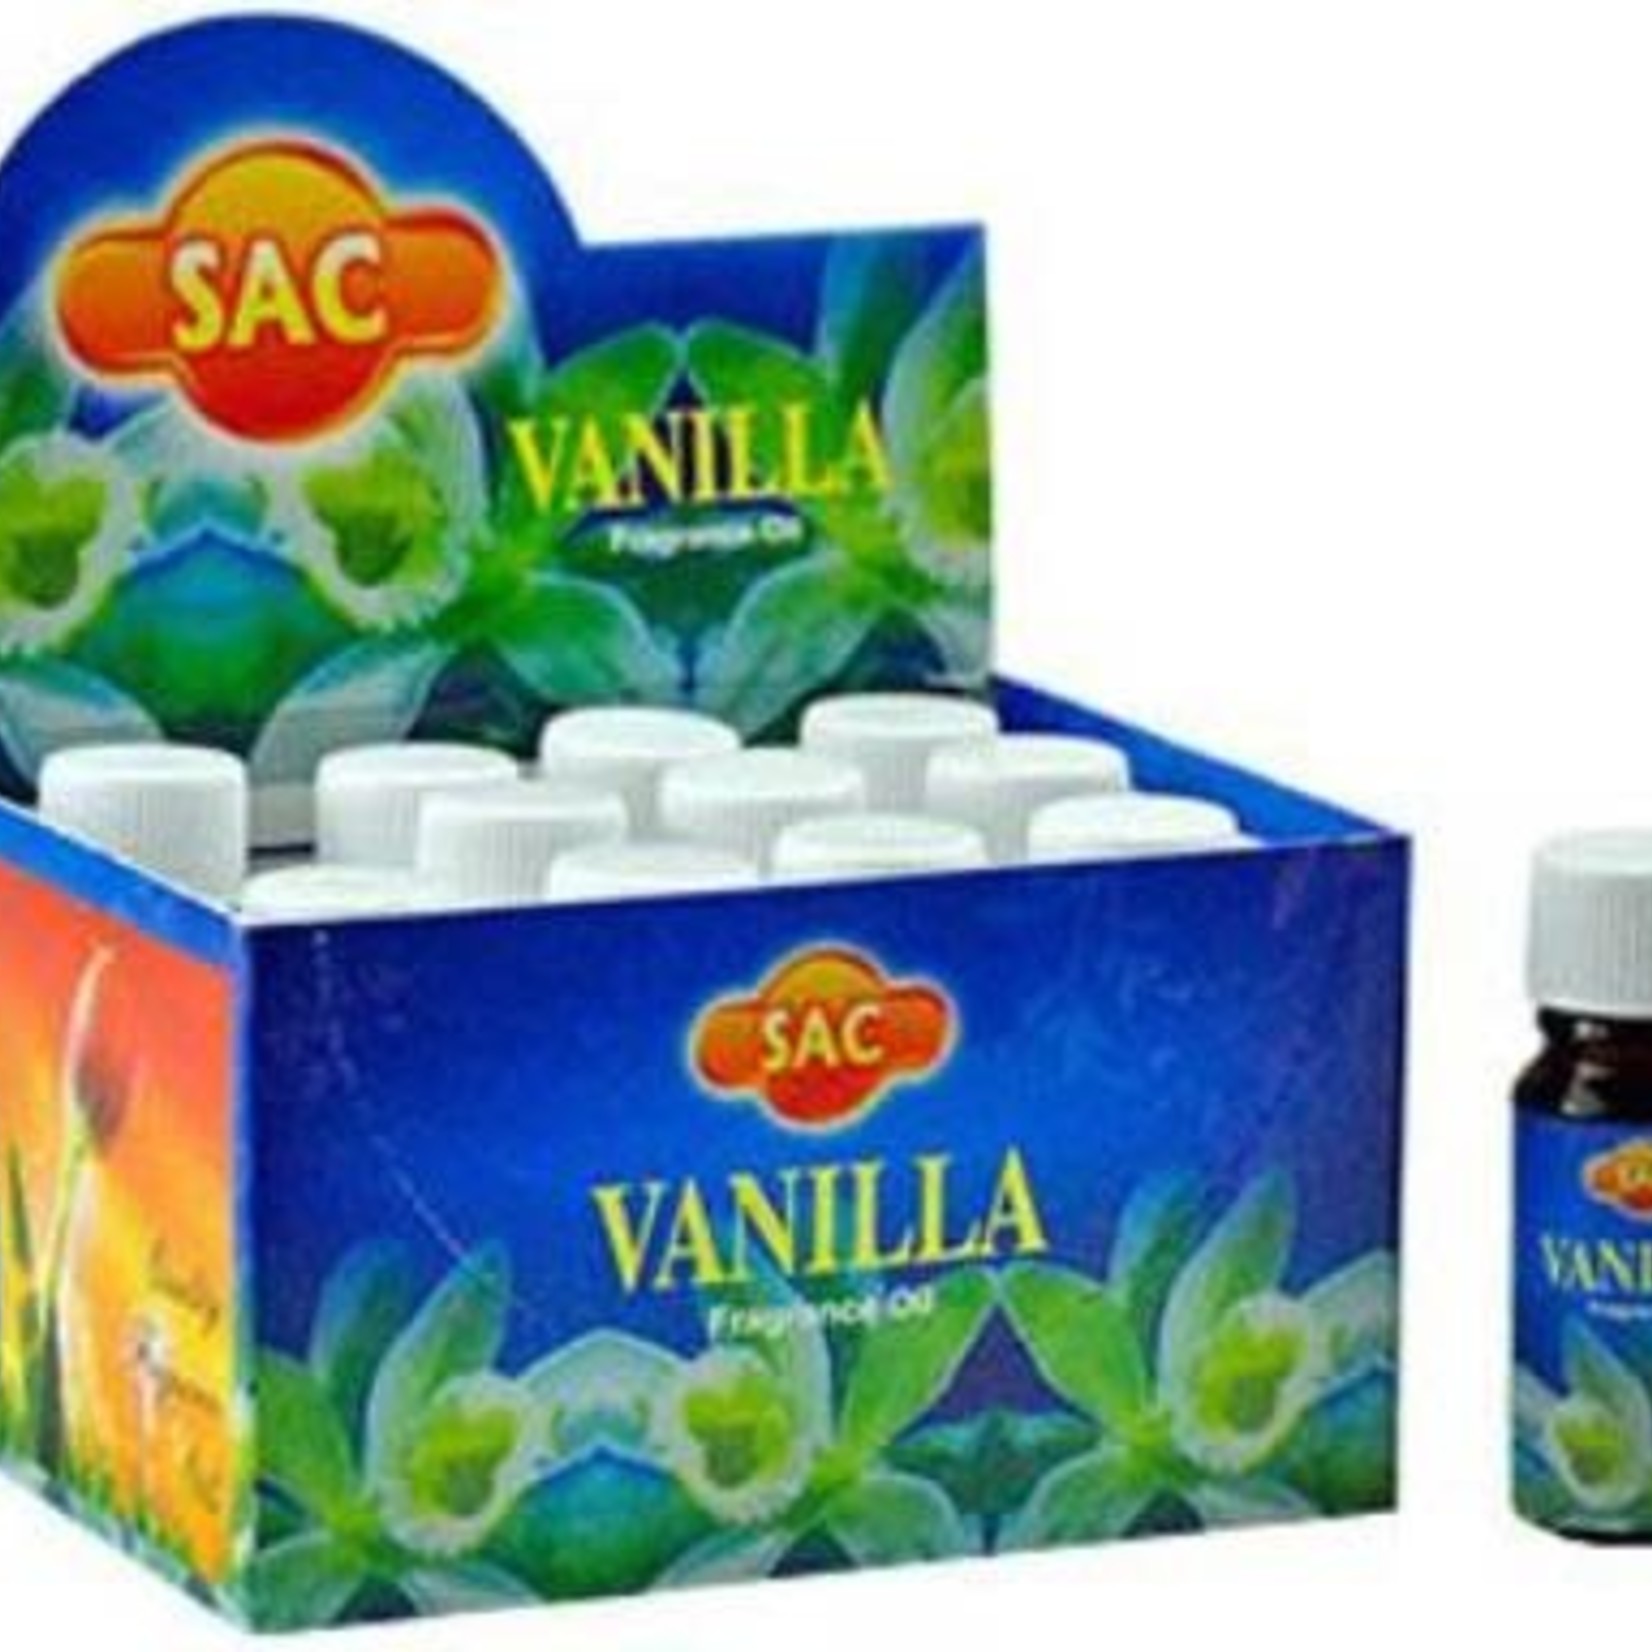 SAC Vanilla Fragrance Oil - SAC